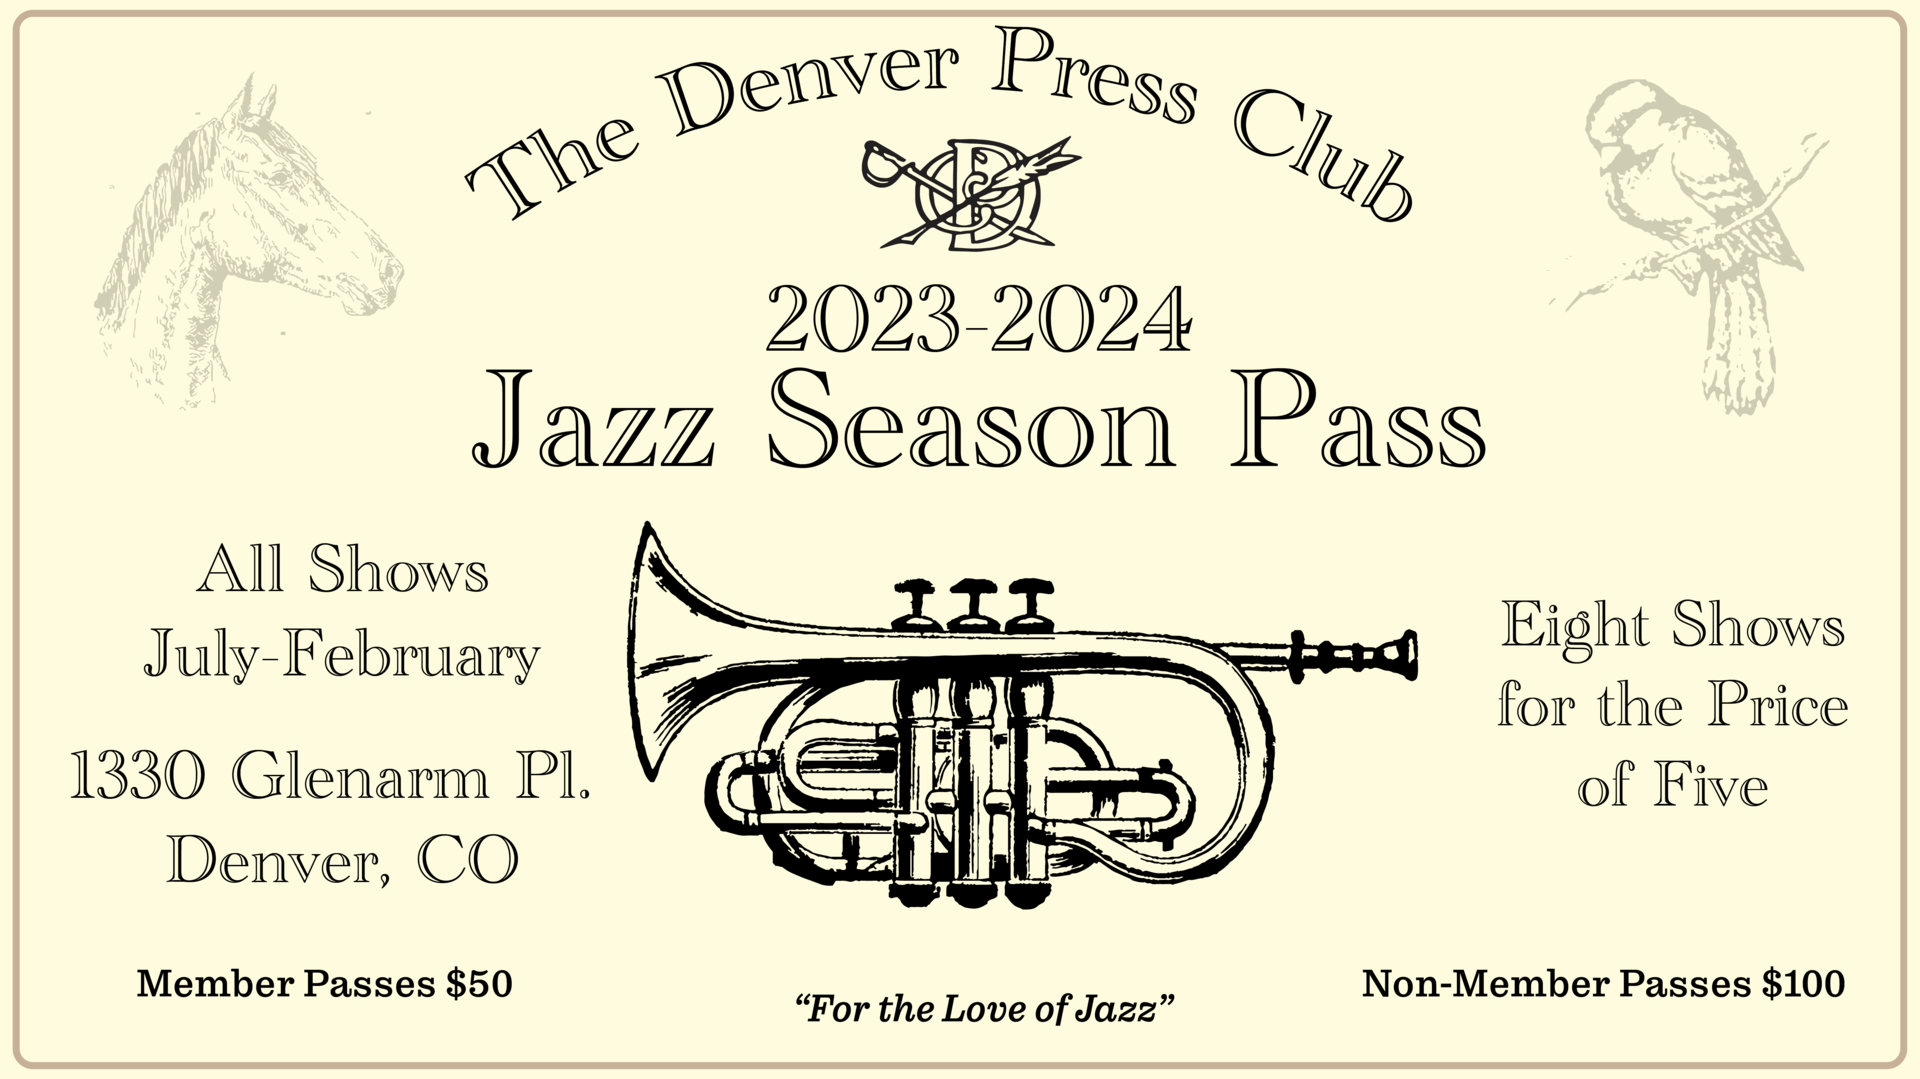  Jazz at the Denver Press Club Season Pass